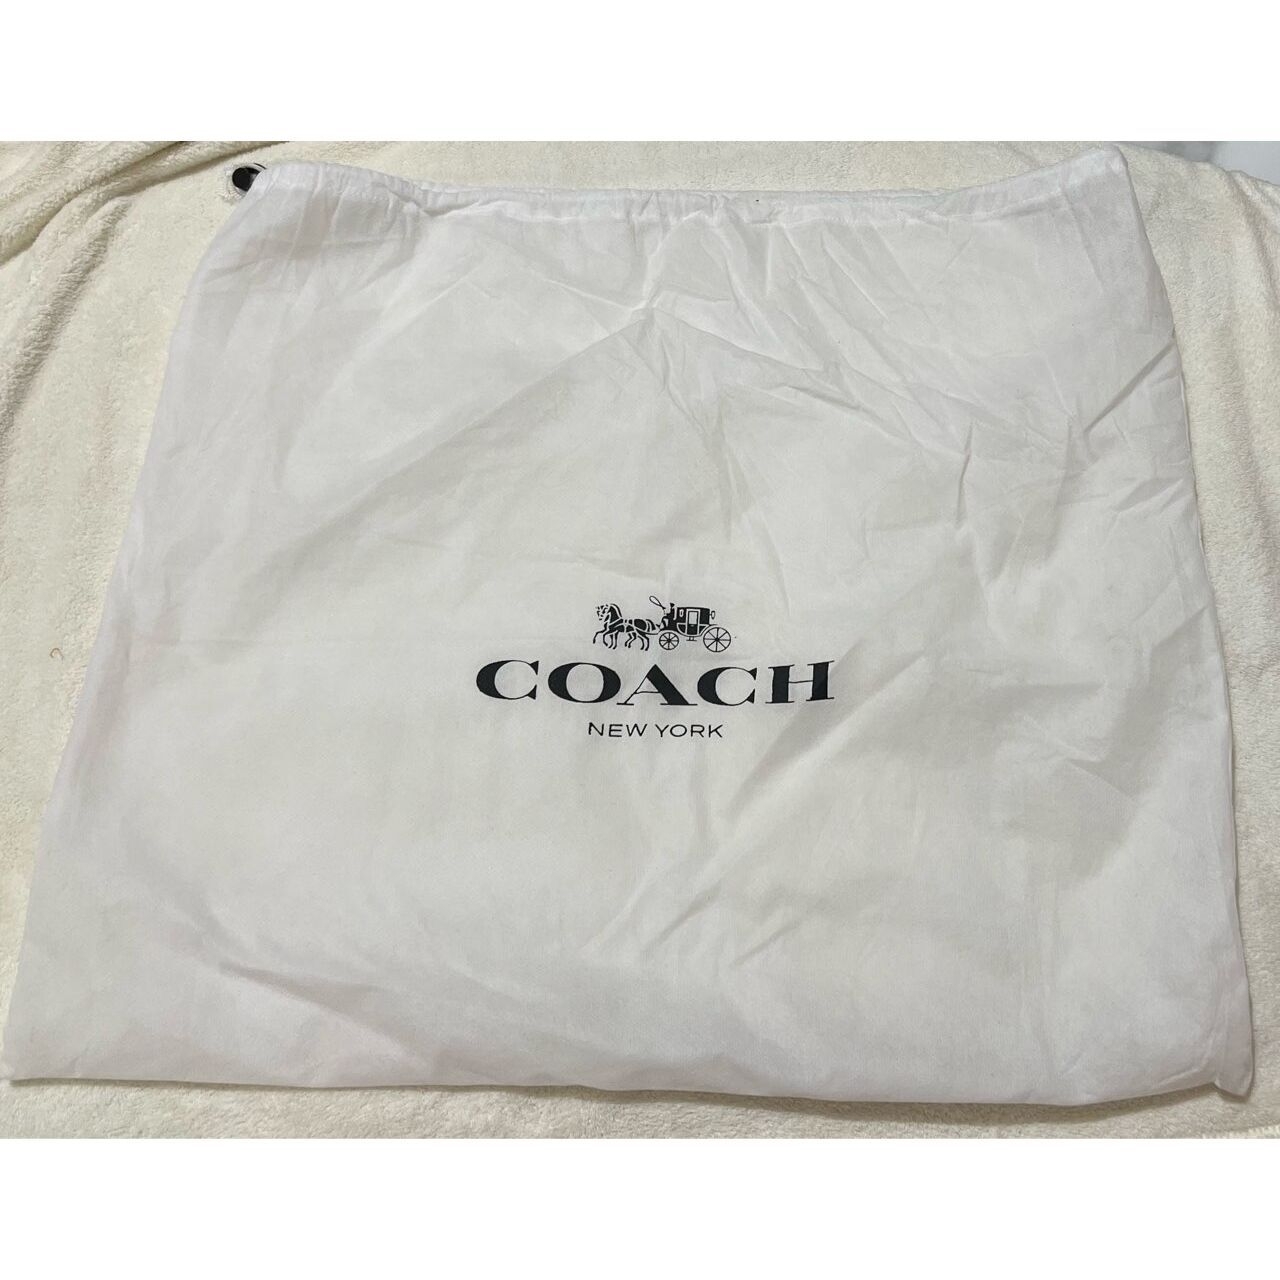 Coach Black Tote Bag